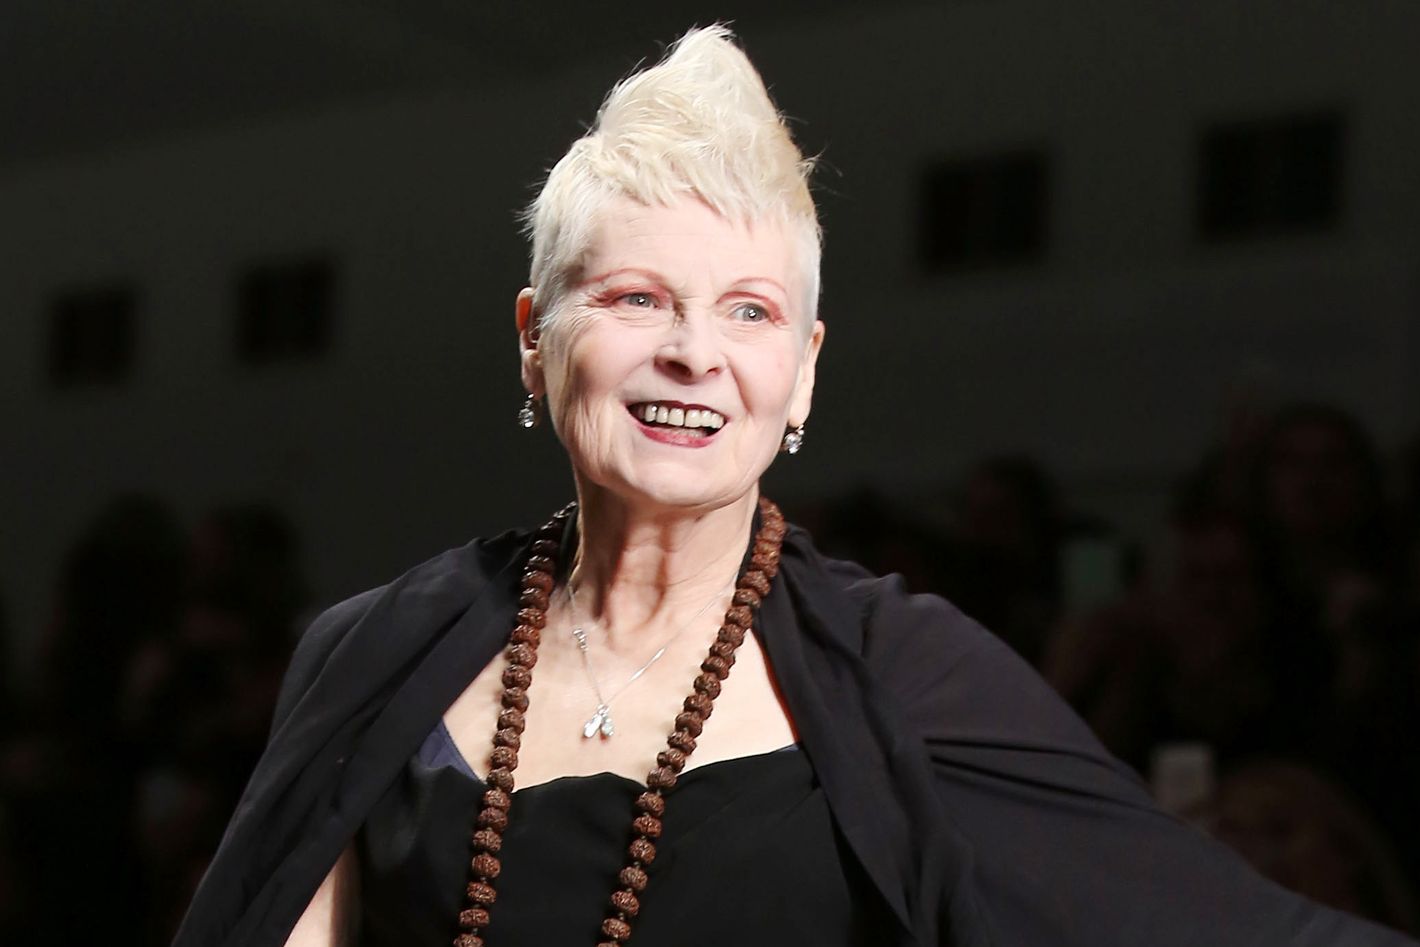 Being Mr Westwood: Vivienne is 'eccentric, serious and genuine', Vivienne  Westwood